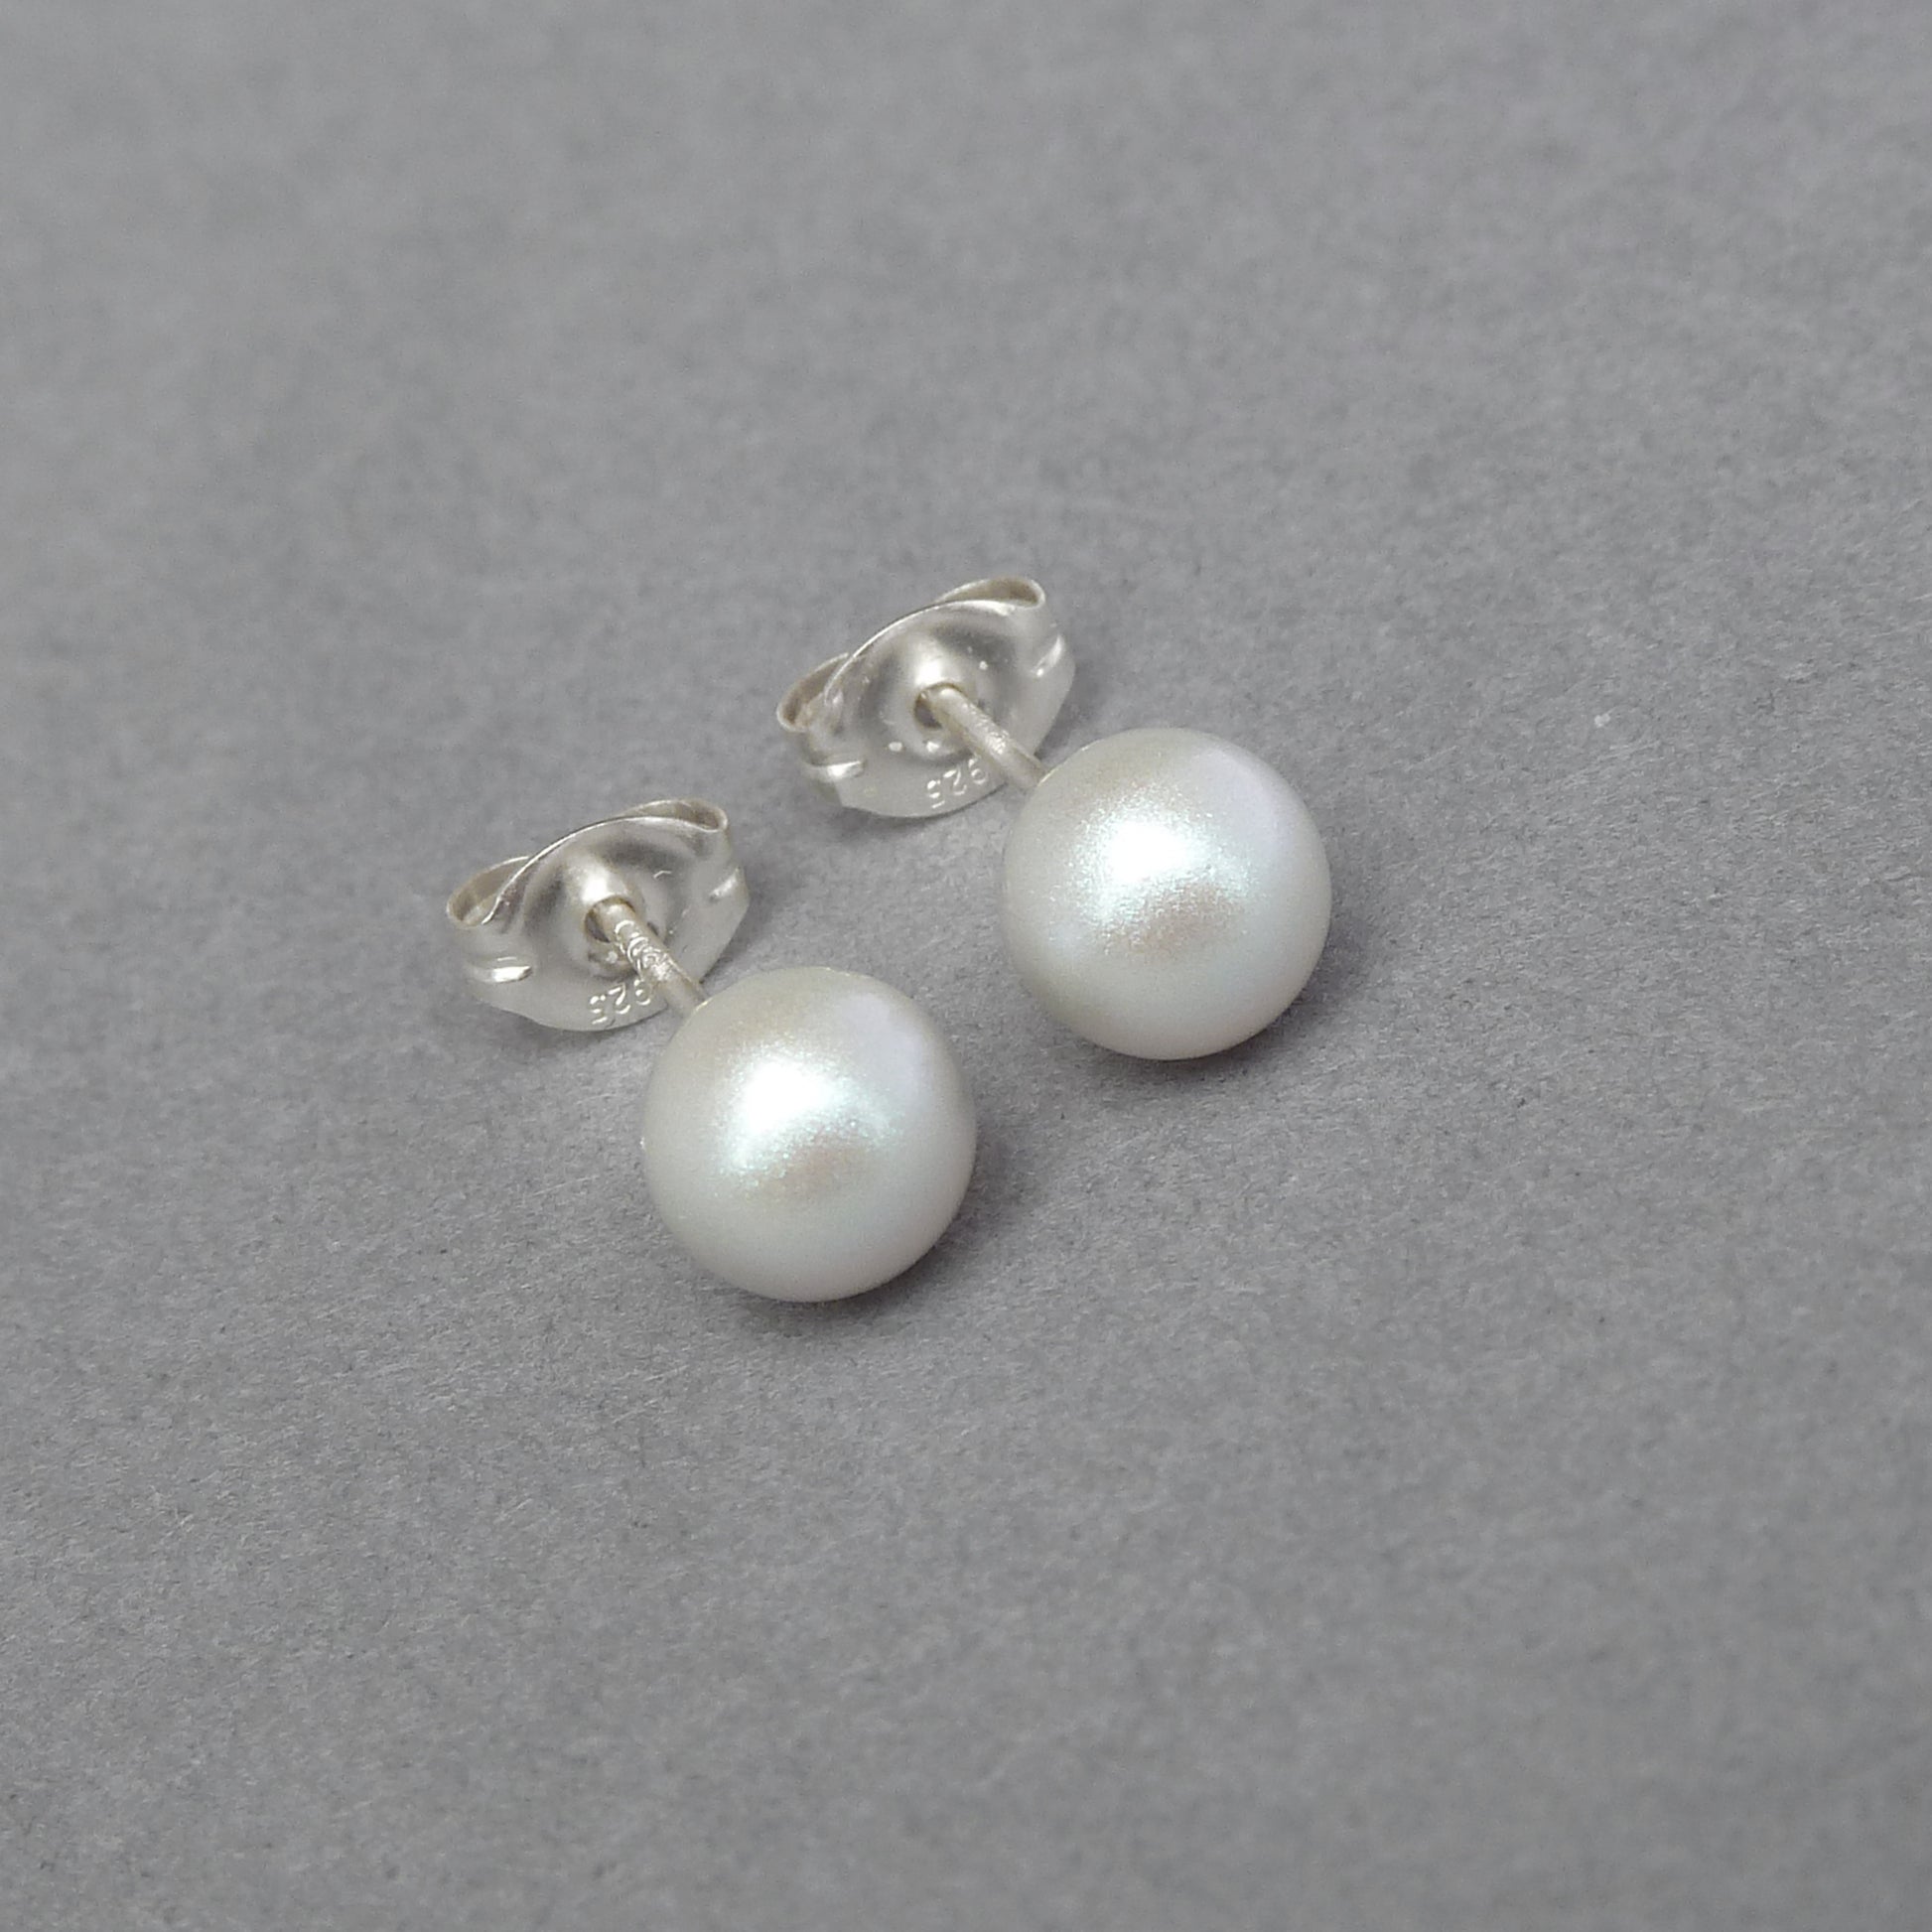 Iridescent dove grey pearl stud earrings